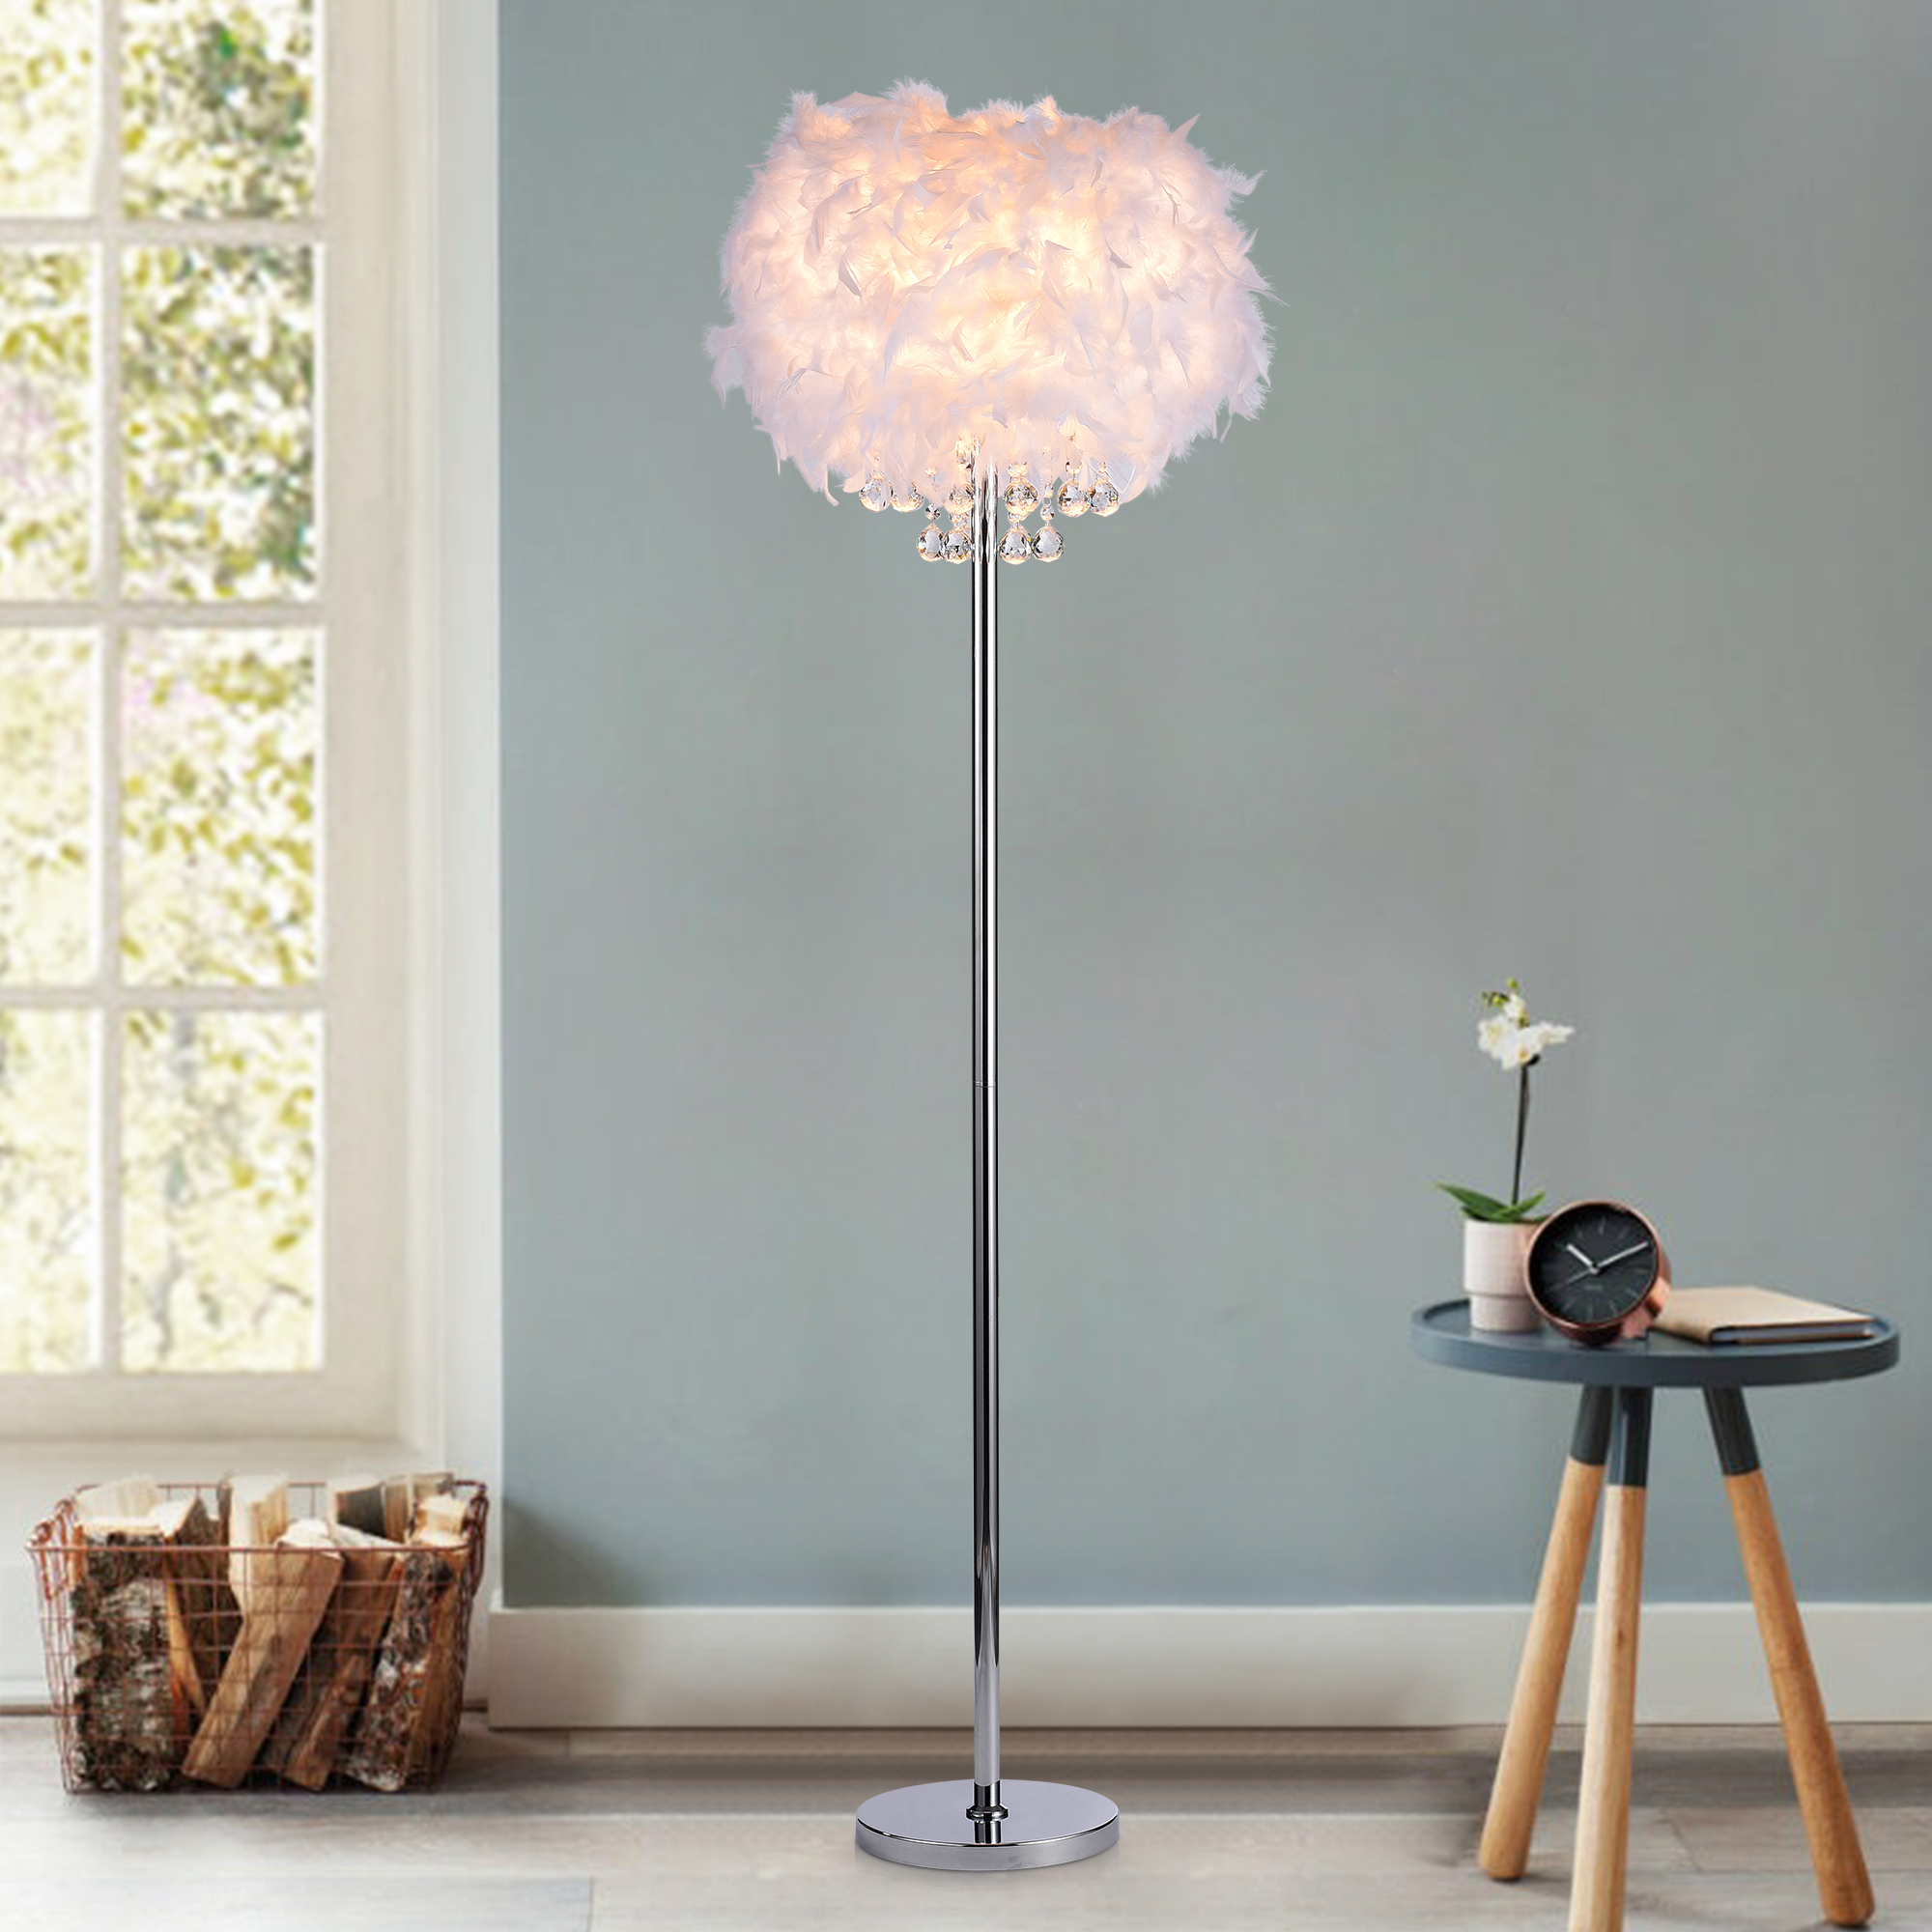 IM Lighting 3-light chrome modern me<x>tal crystal feather shade fancy standing for living room decor floor lamp